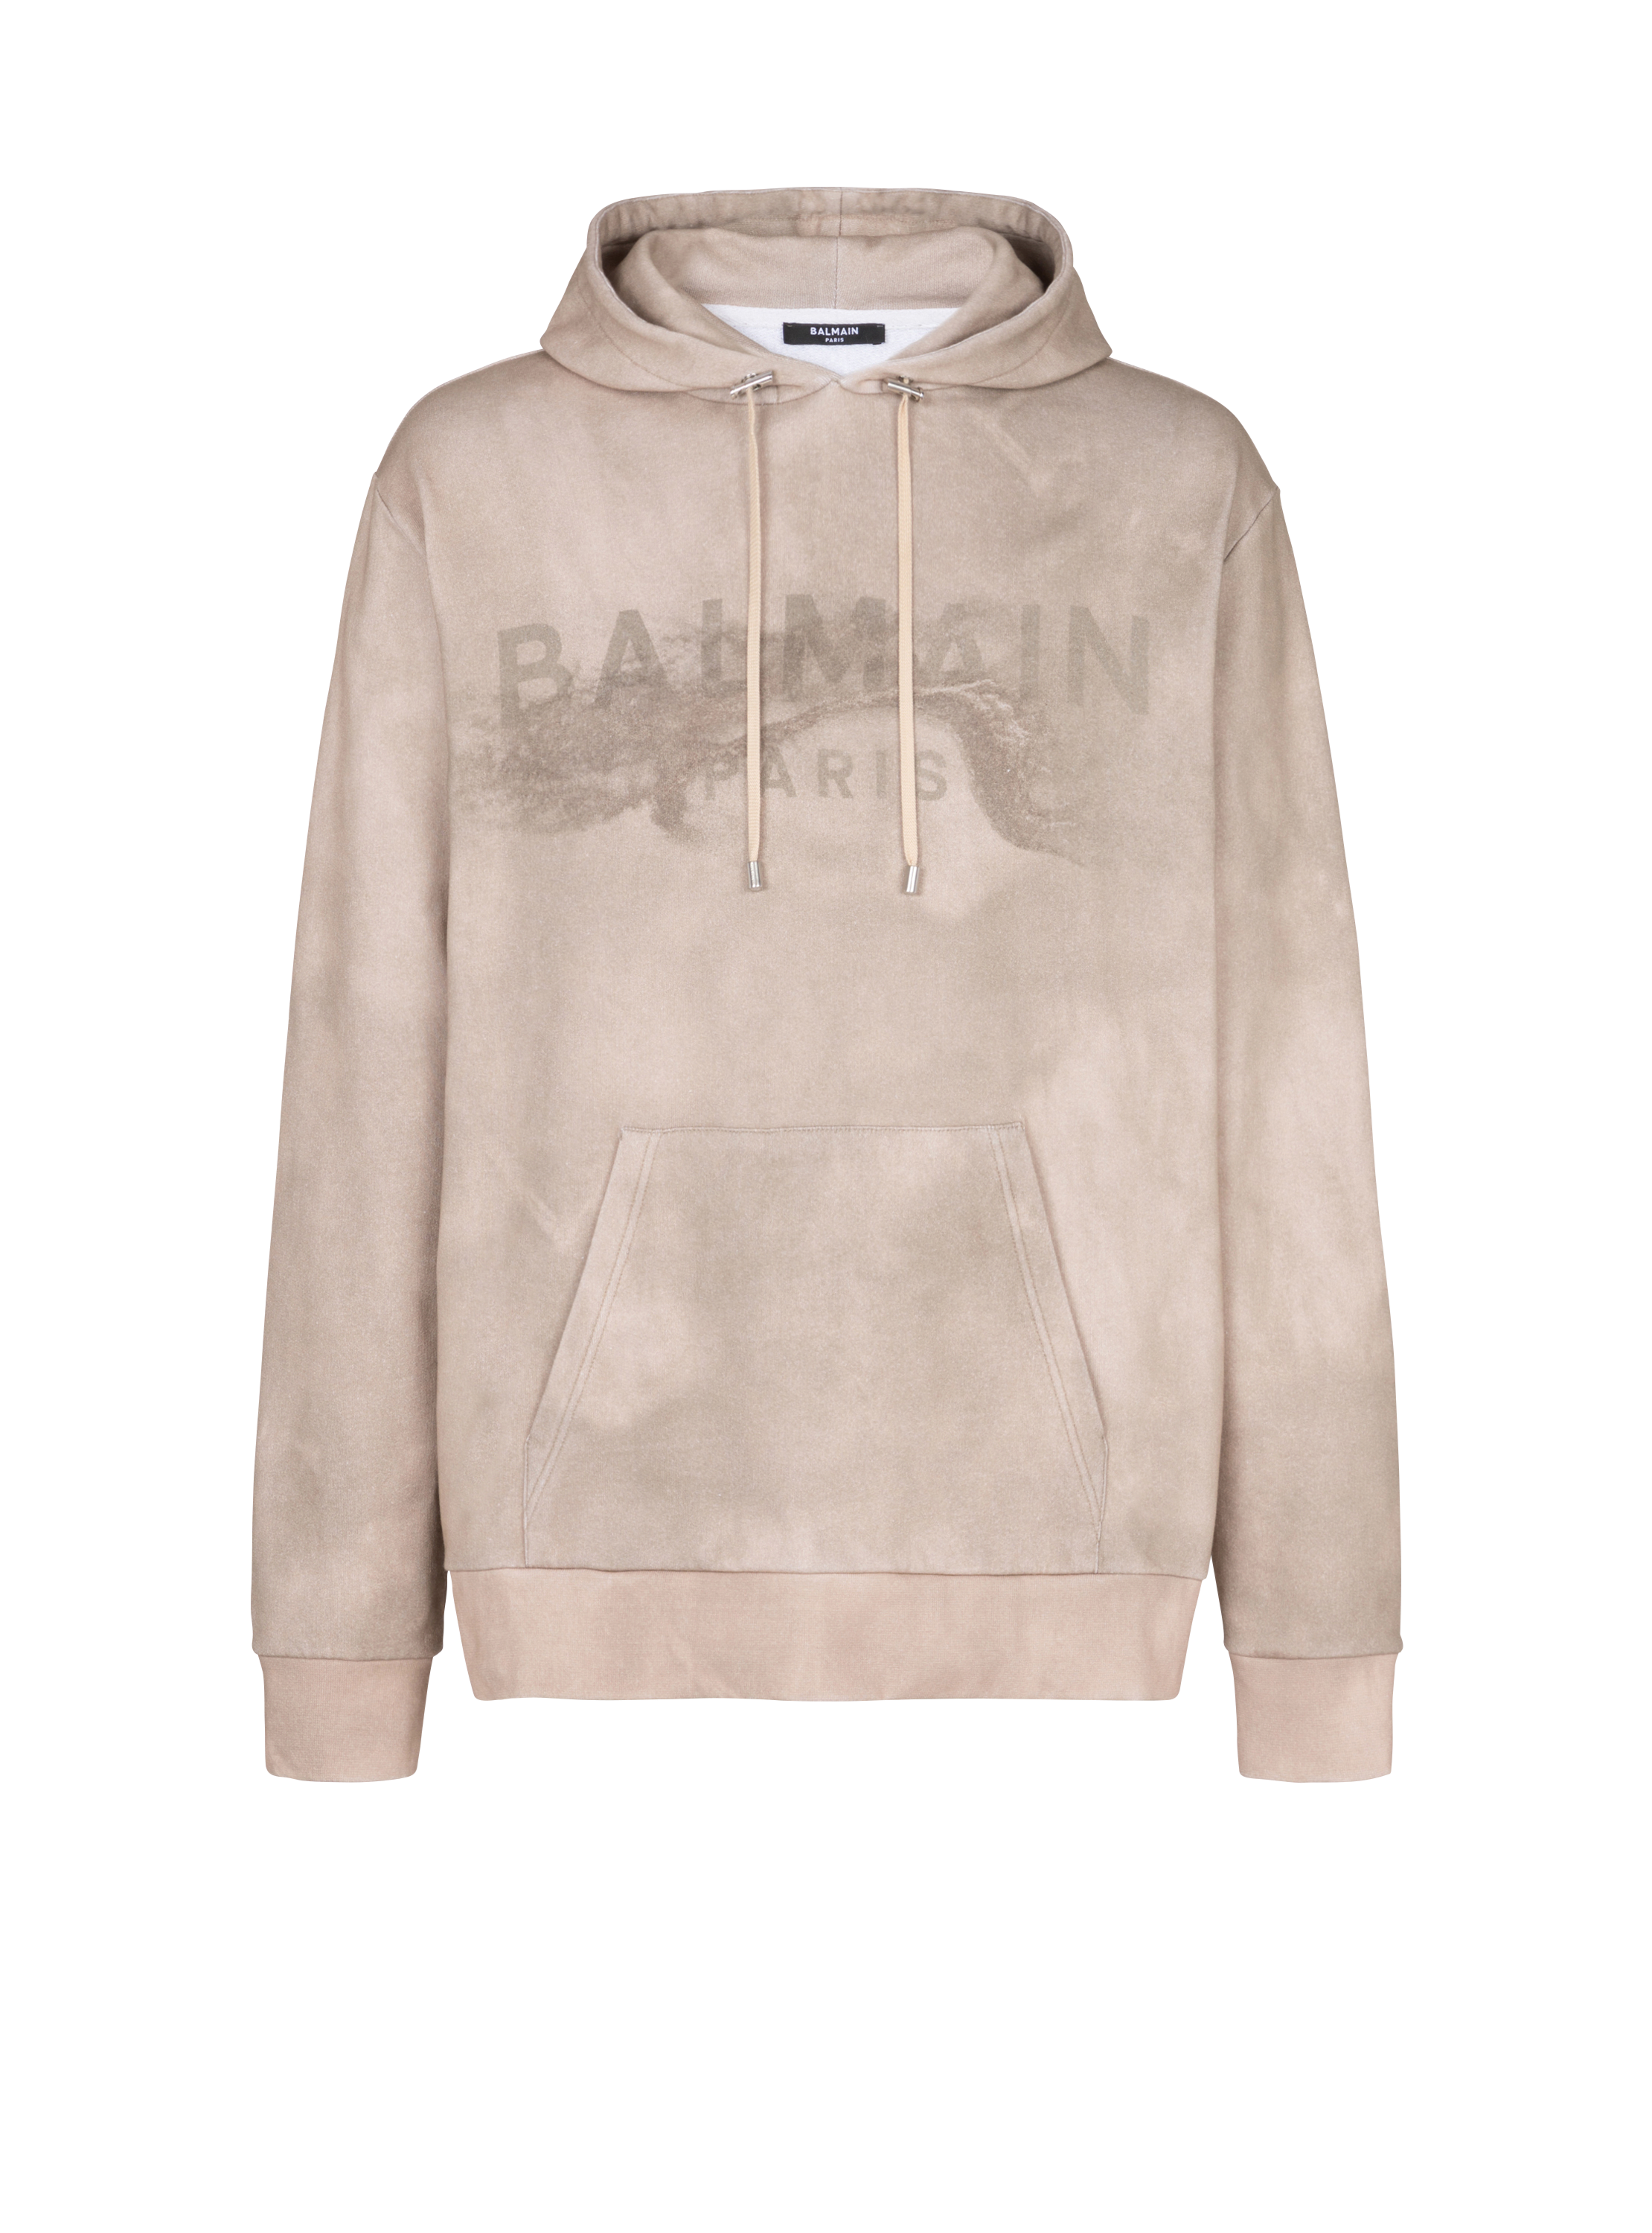 Balmain Paris沙漠标志印花环保设计棉质连帽运动衫, beige, hi-res